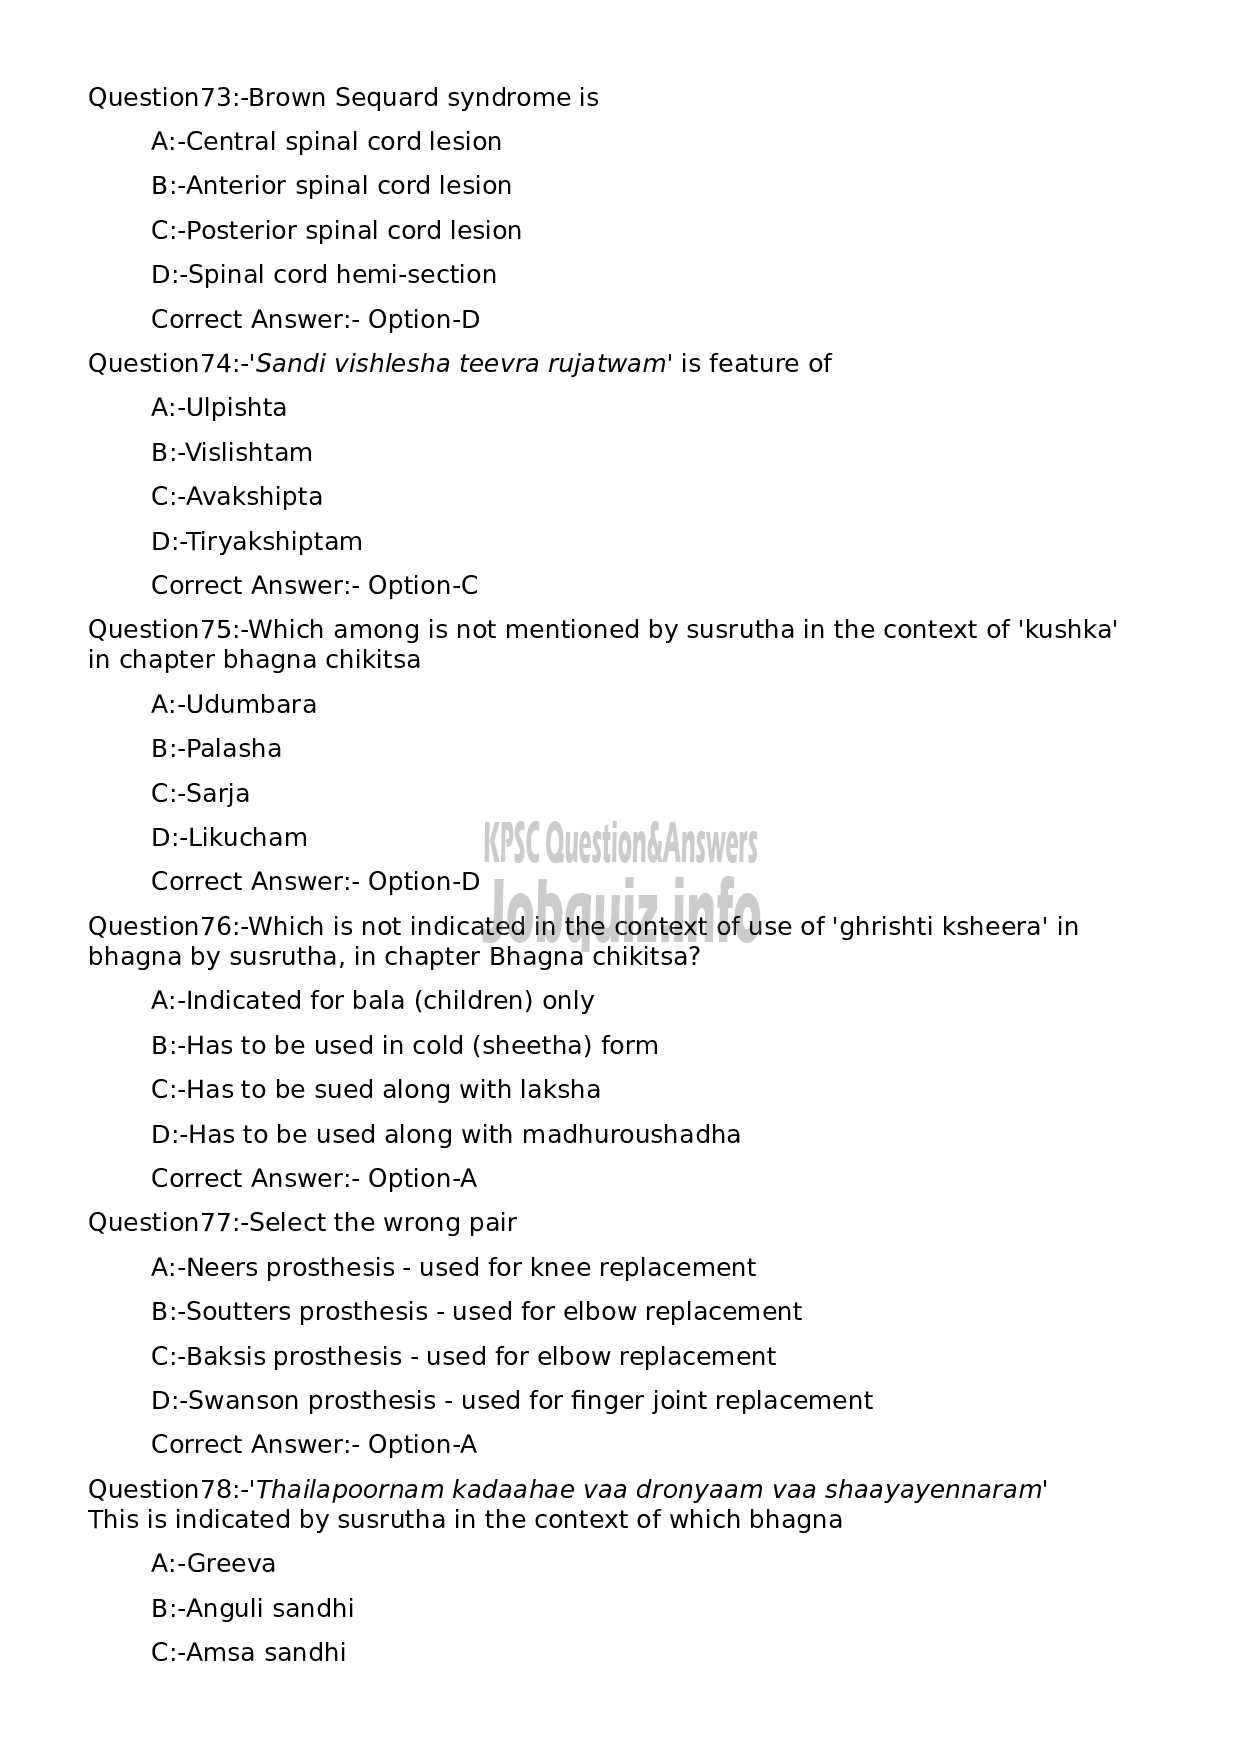 Kerala PSC Question Paper - Medical Officer (Marma)-17